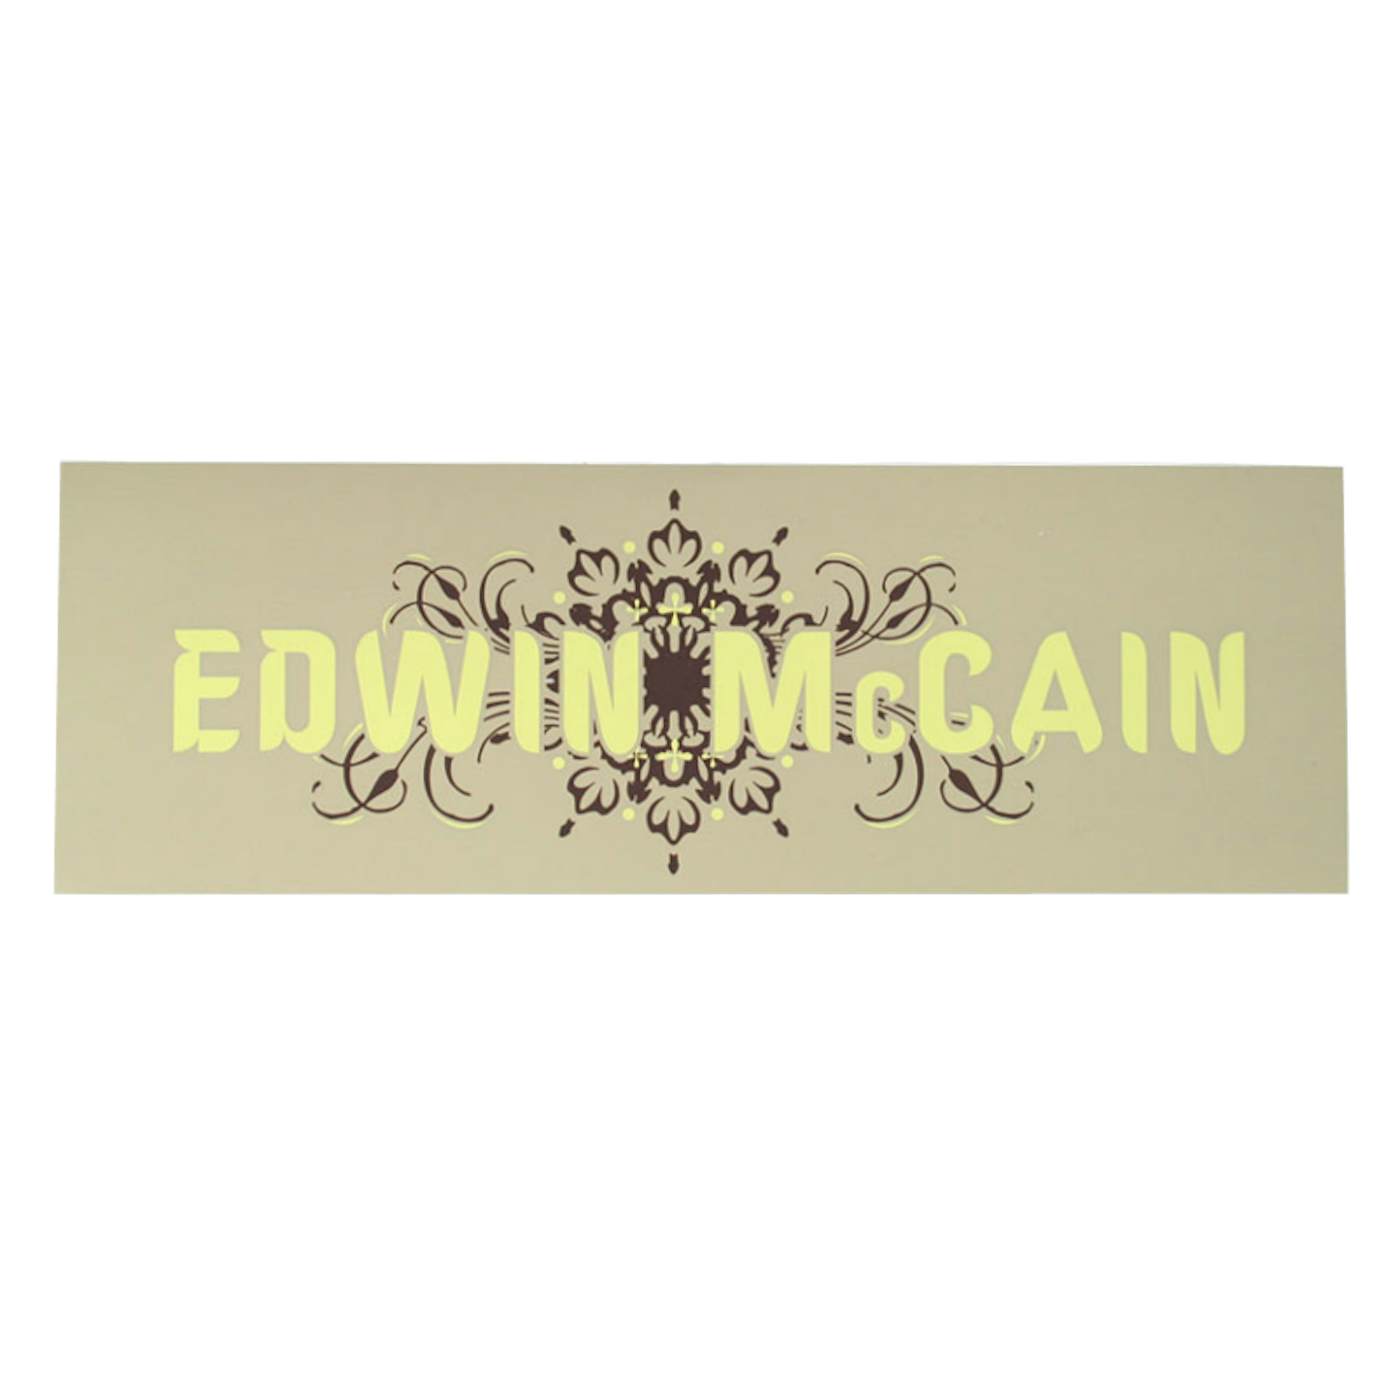 Edwin McCain Bumper Sticker